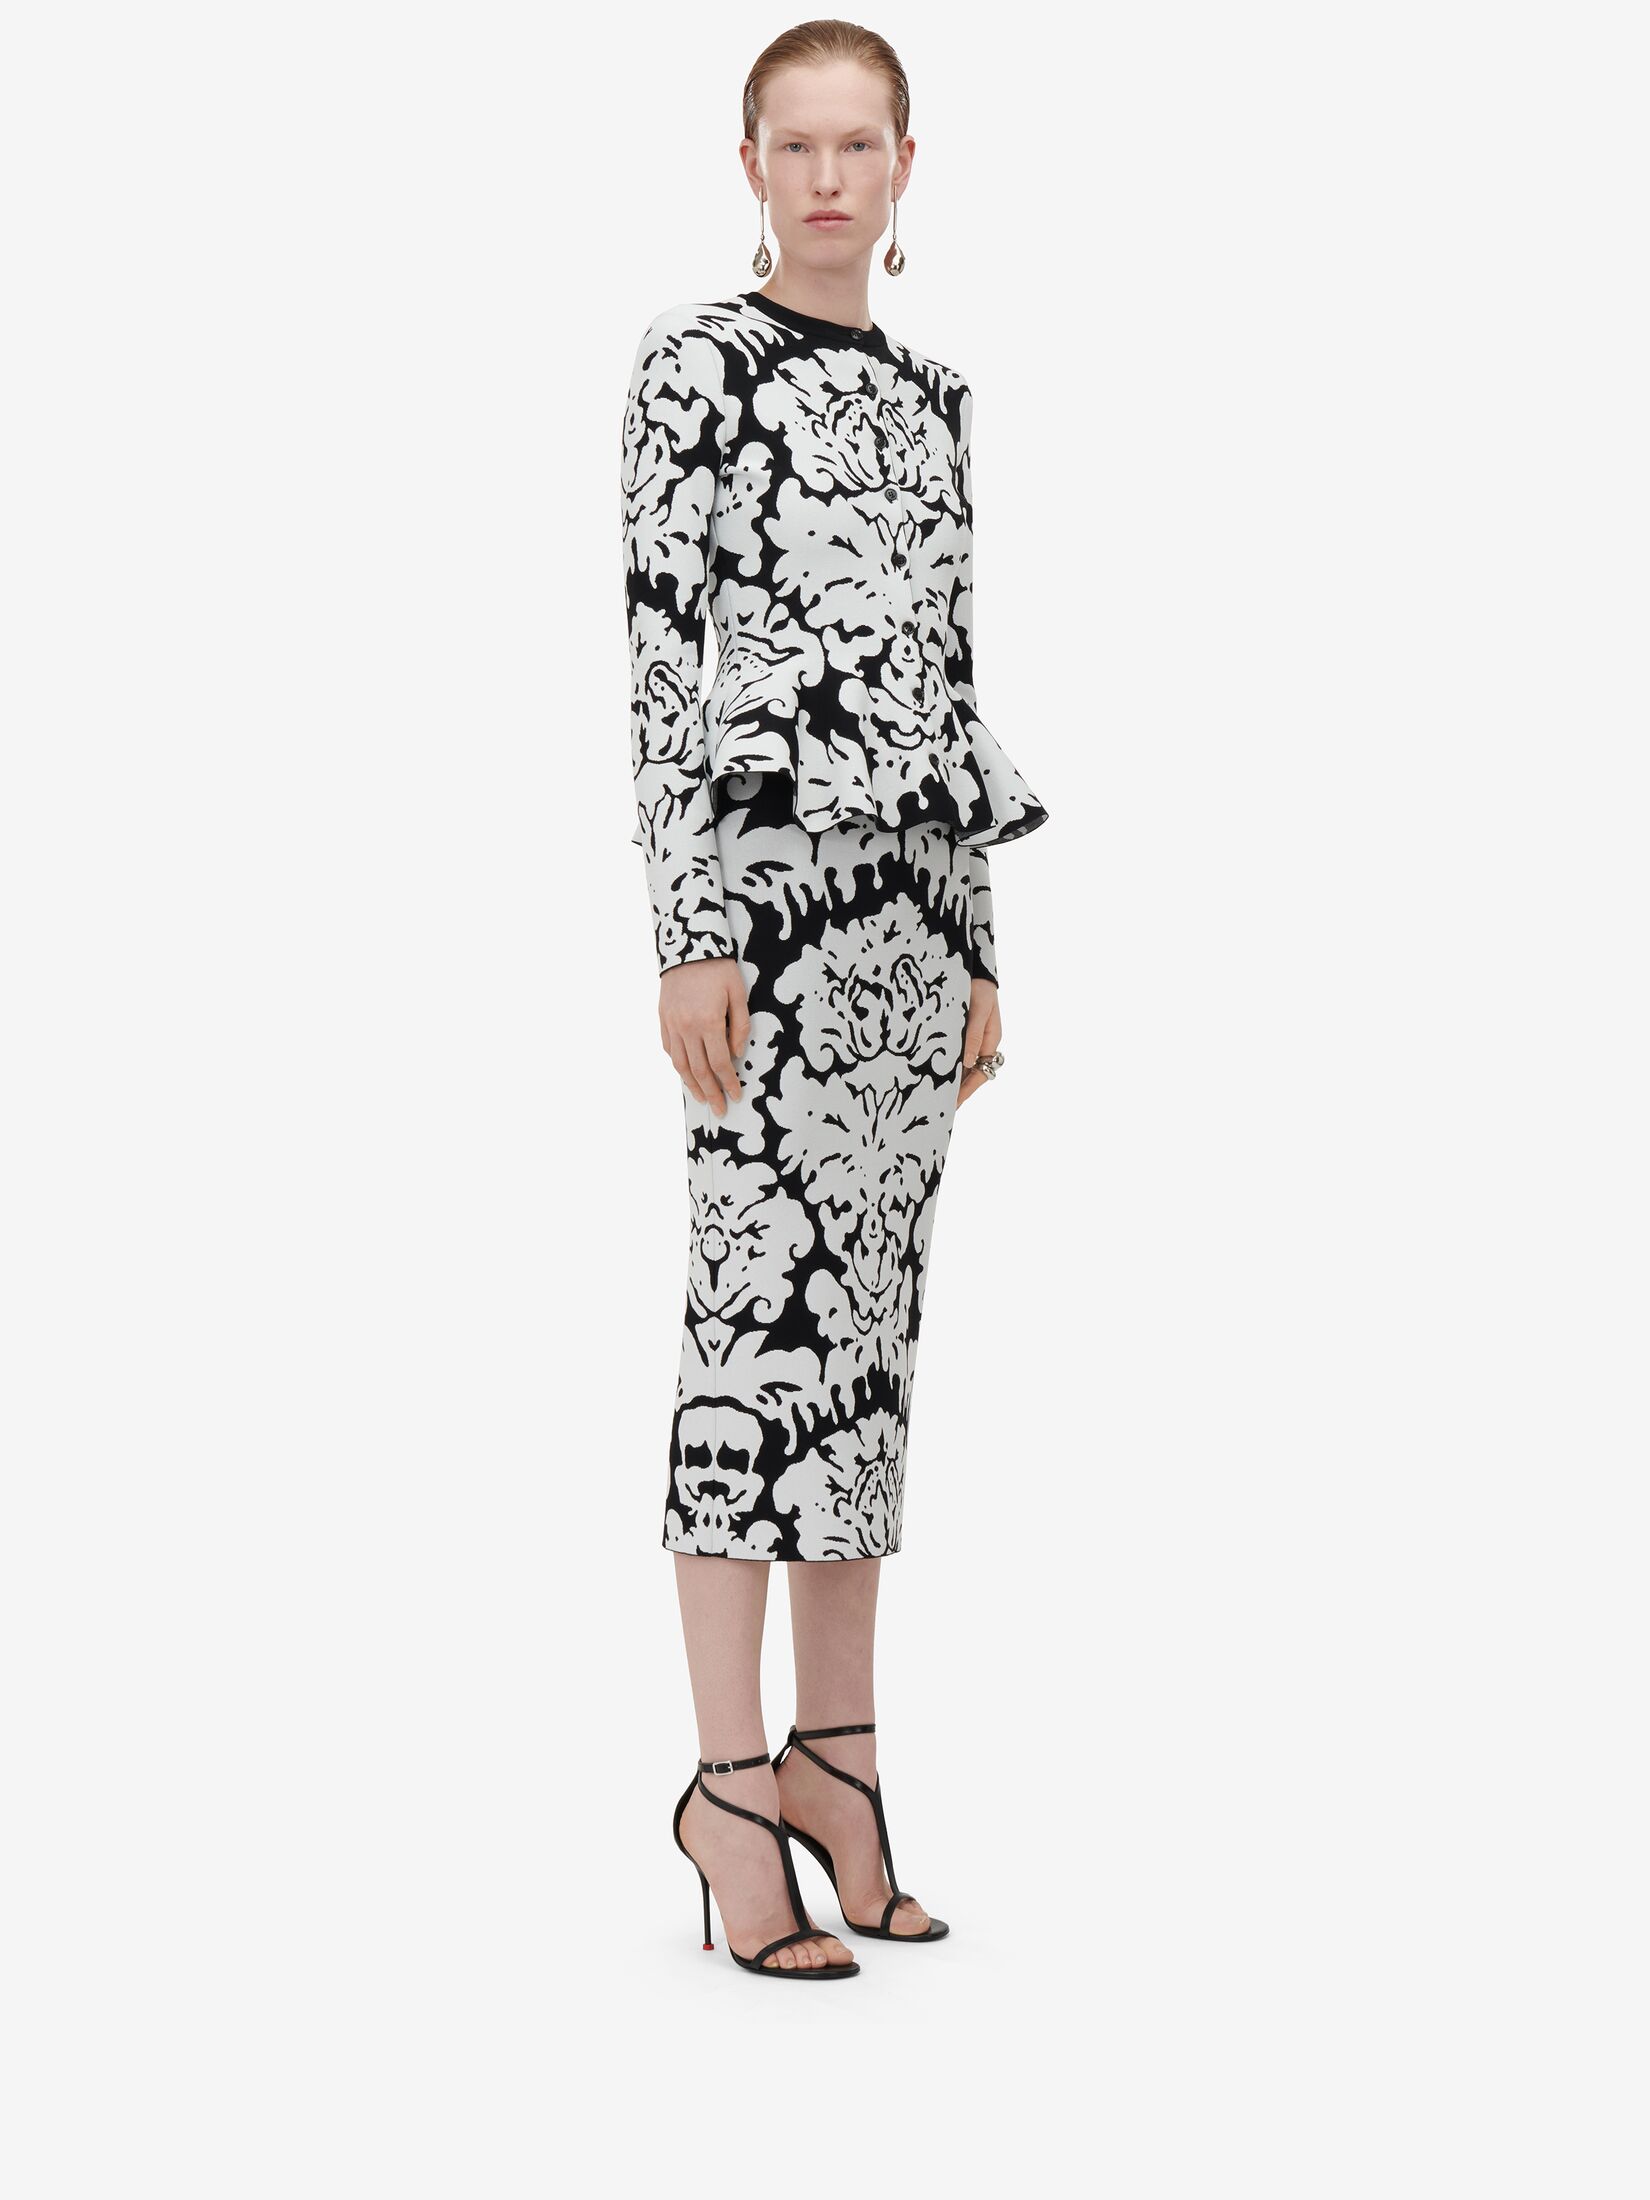 Damask Jacquard Mini Dress in Black/White | Alexander McQueen US